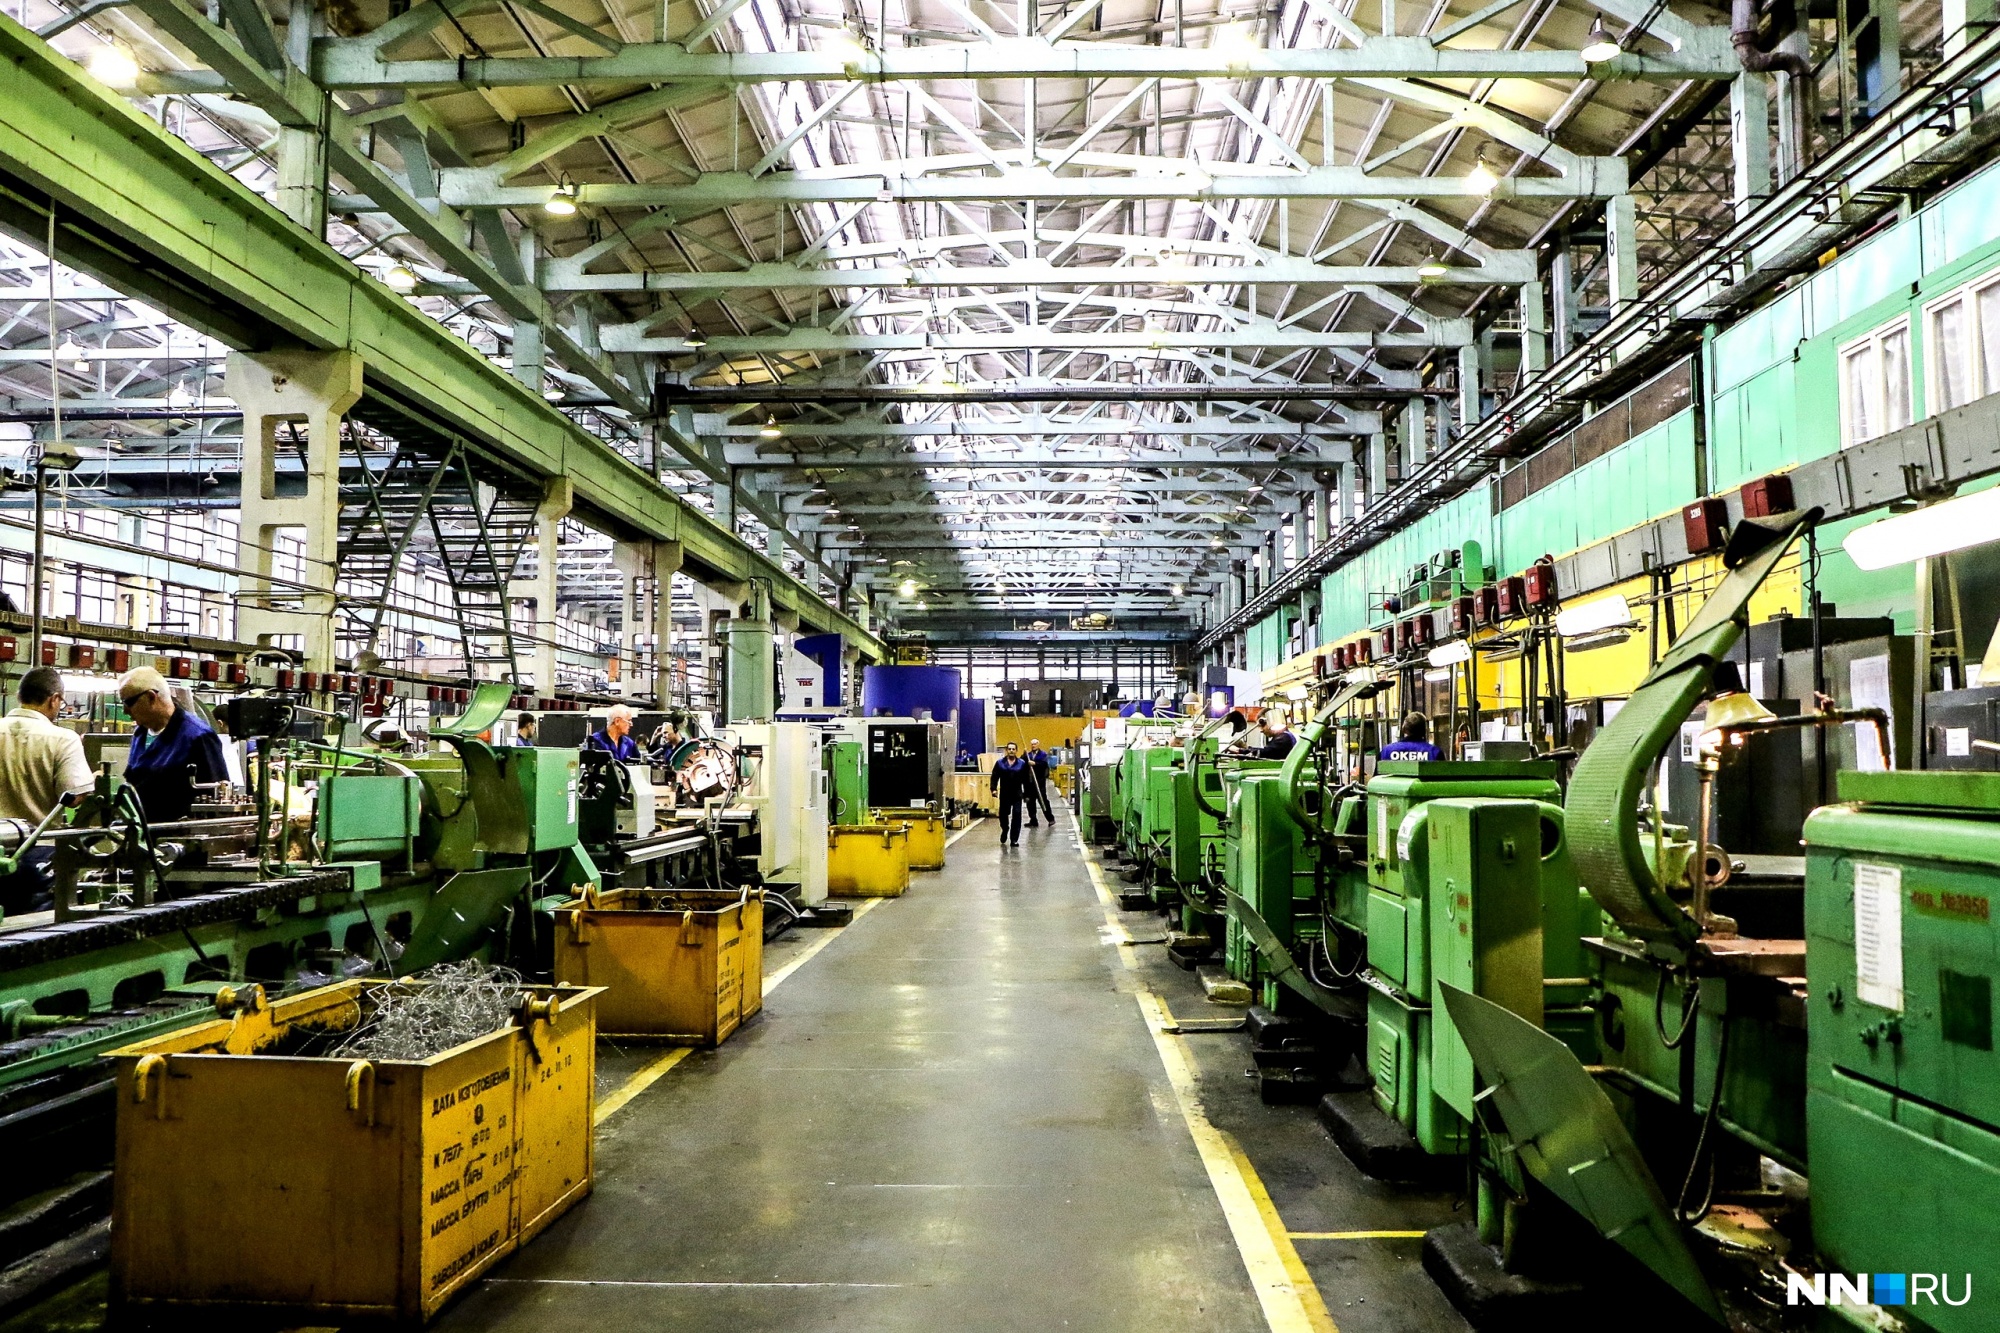 «Благодарим за признание качества»: завод в Дзержинске сказал Украине спасибо за санкции